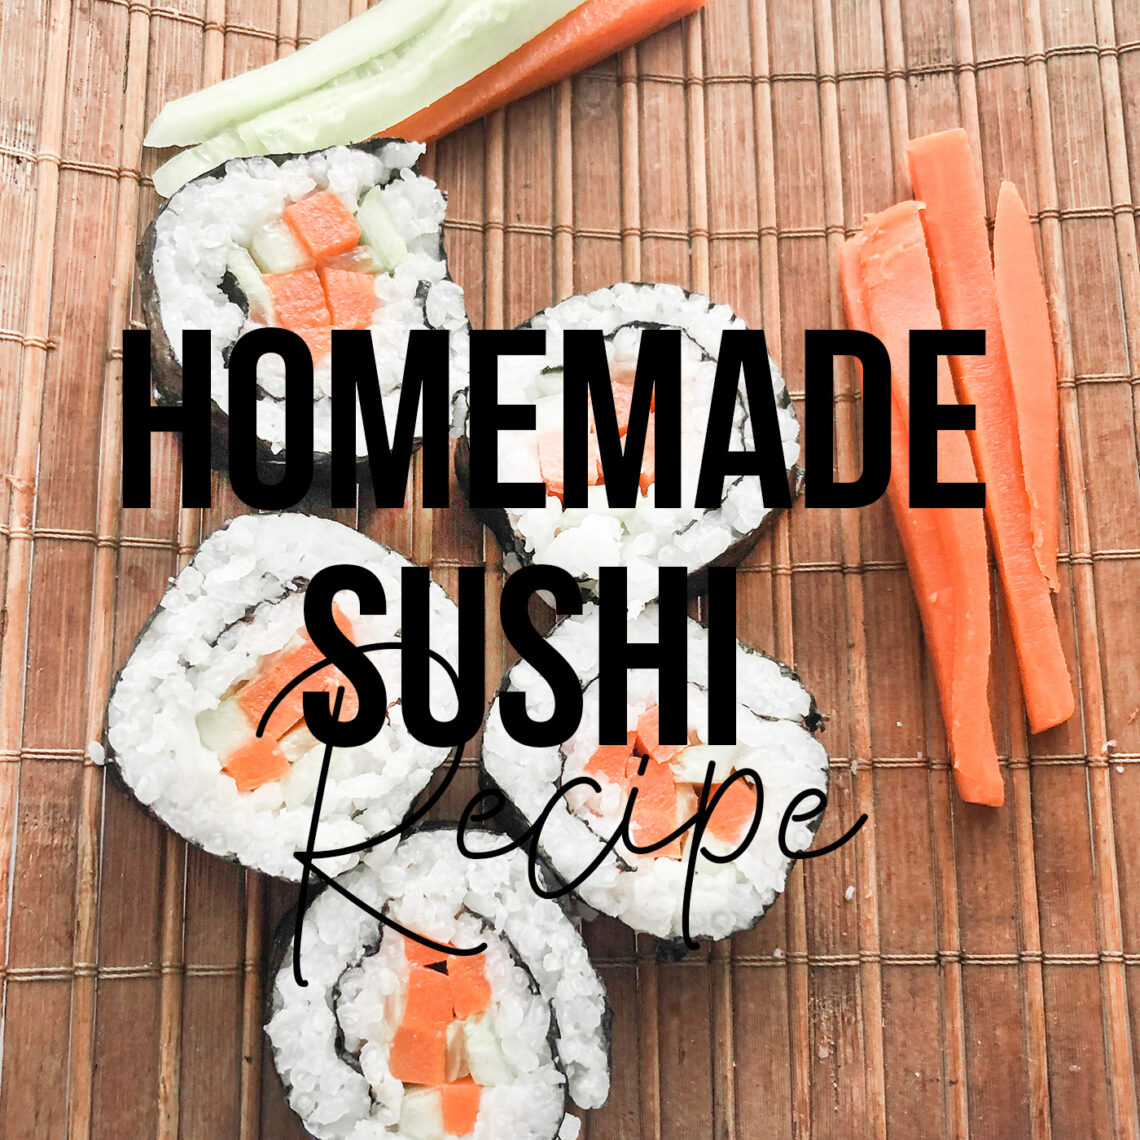 Homemade sushi roll recipe